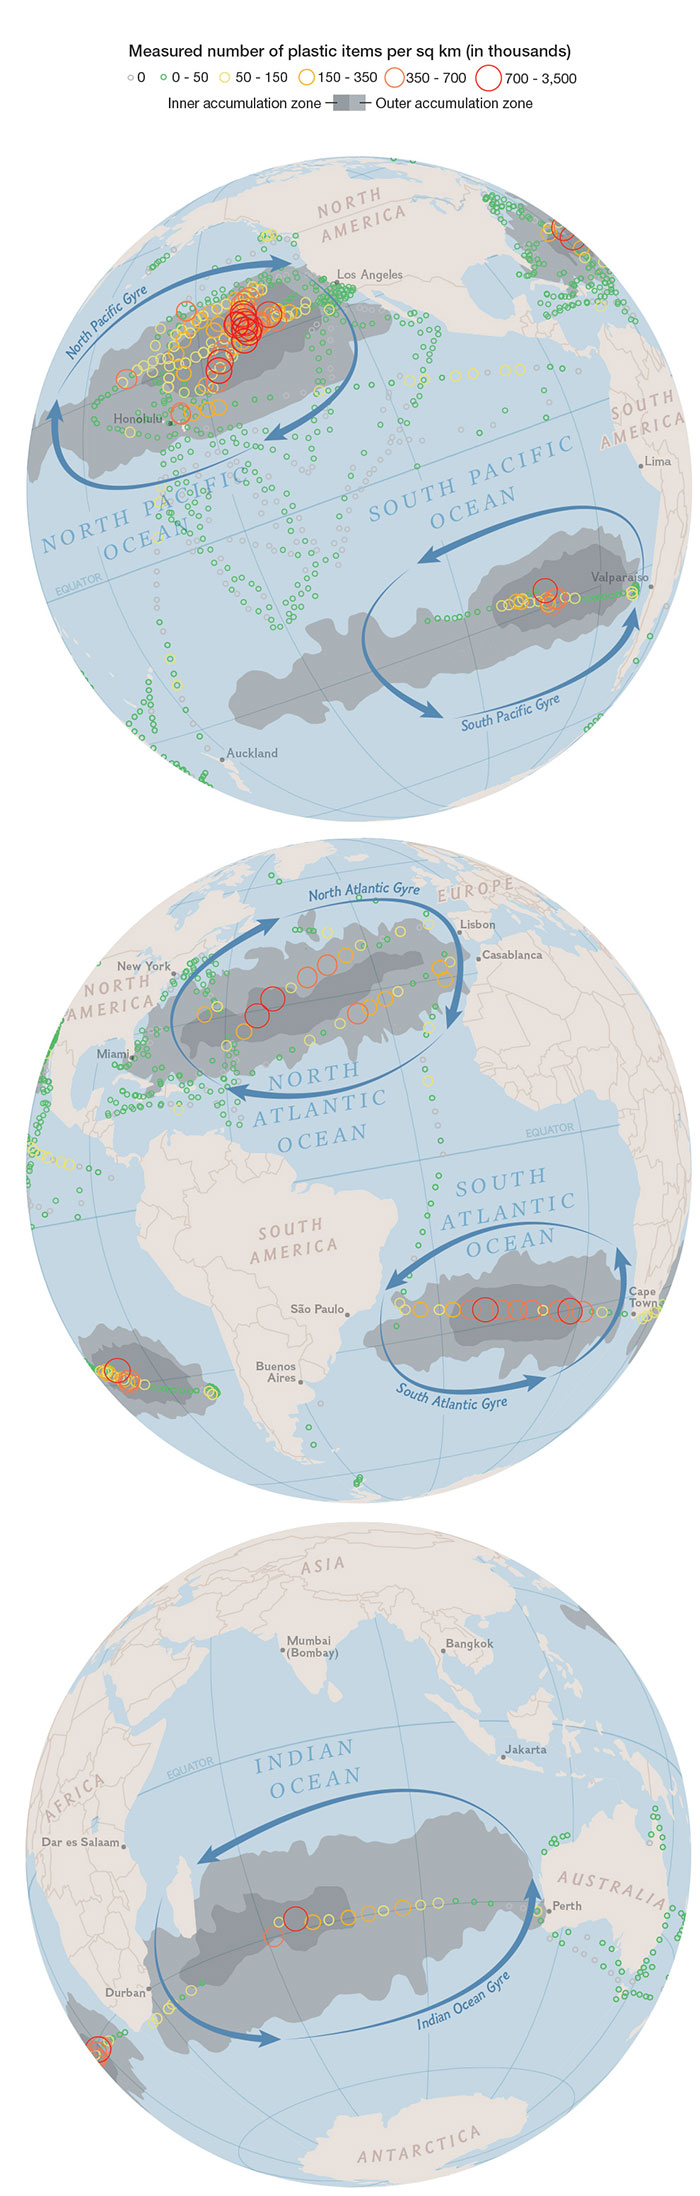 ocean pollution map